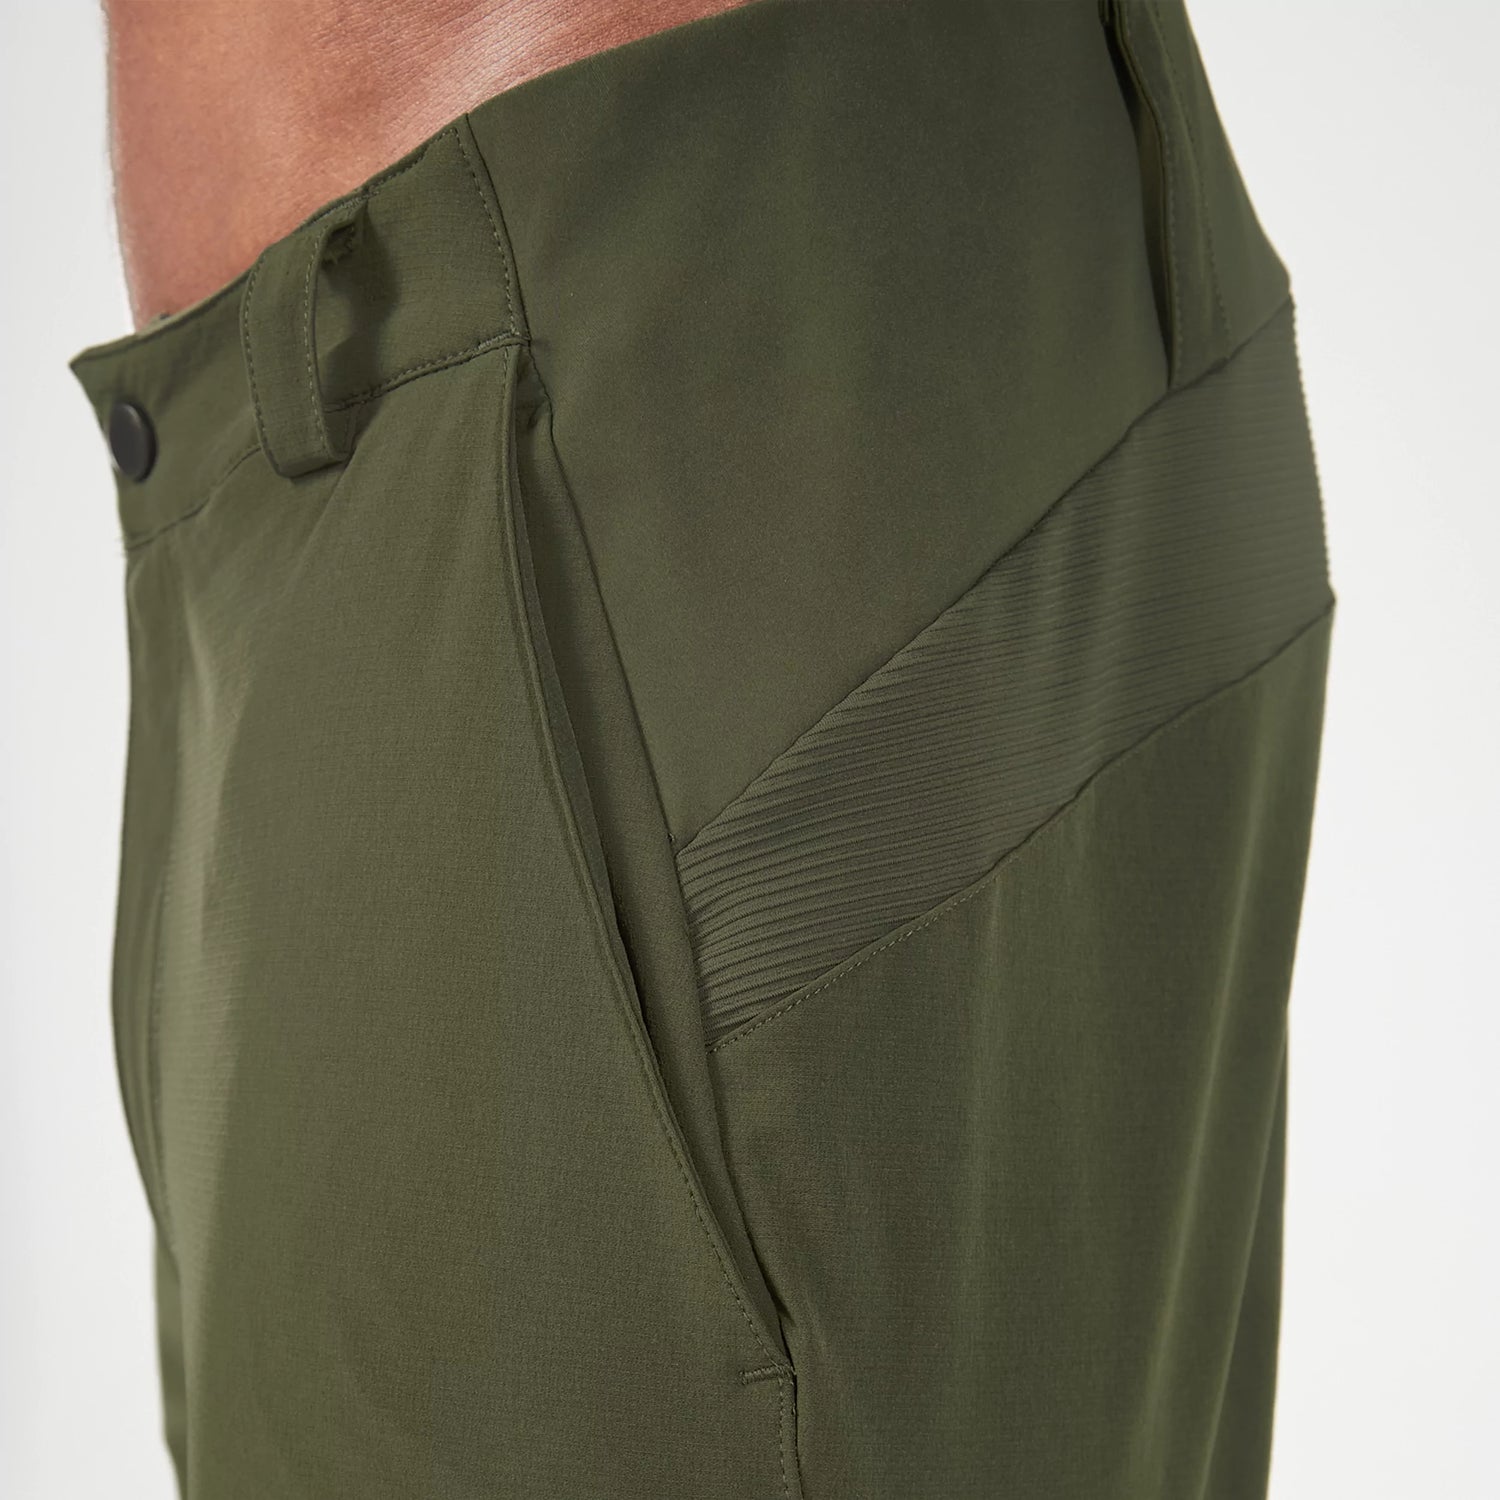 squatwolf-gym-wear-statement-ribbed-smart-pants-kombu-green-workout-pants-for-men